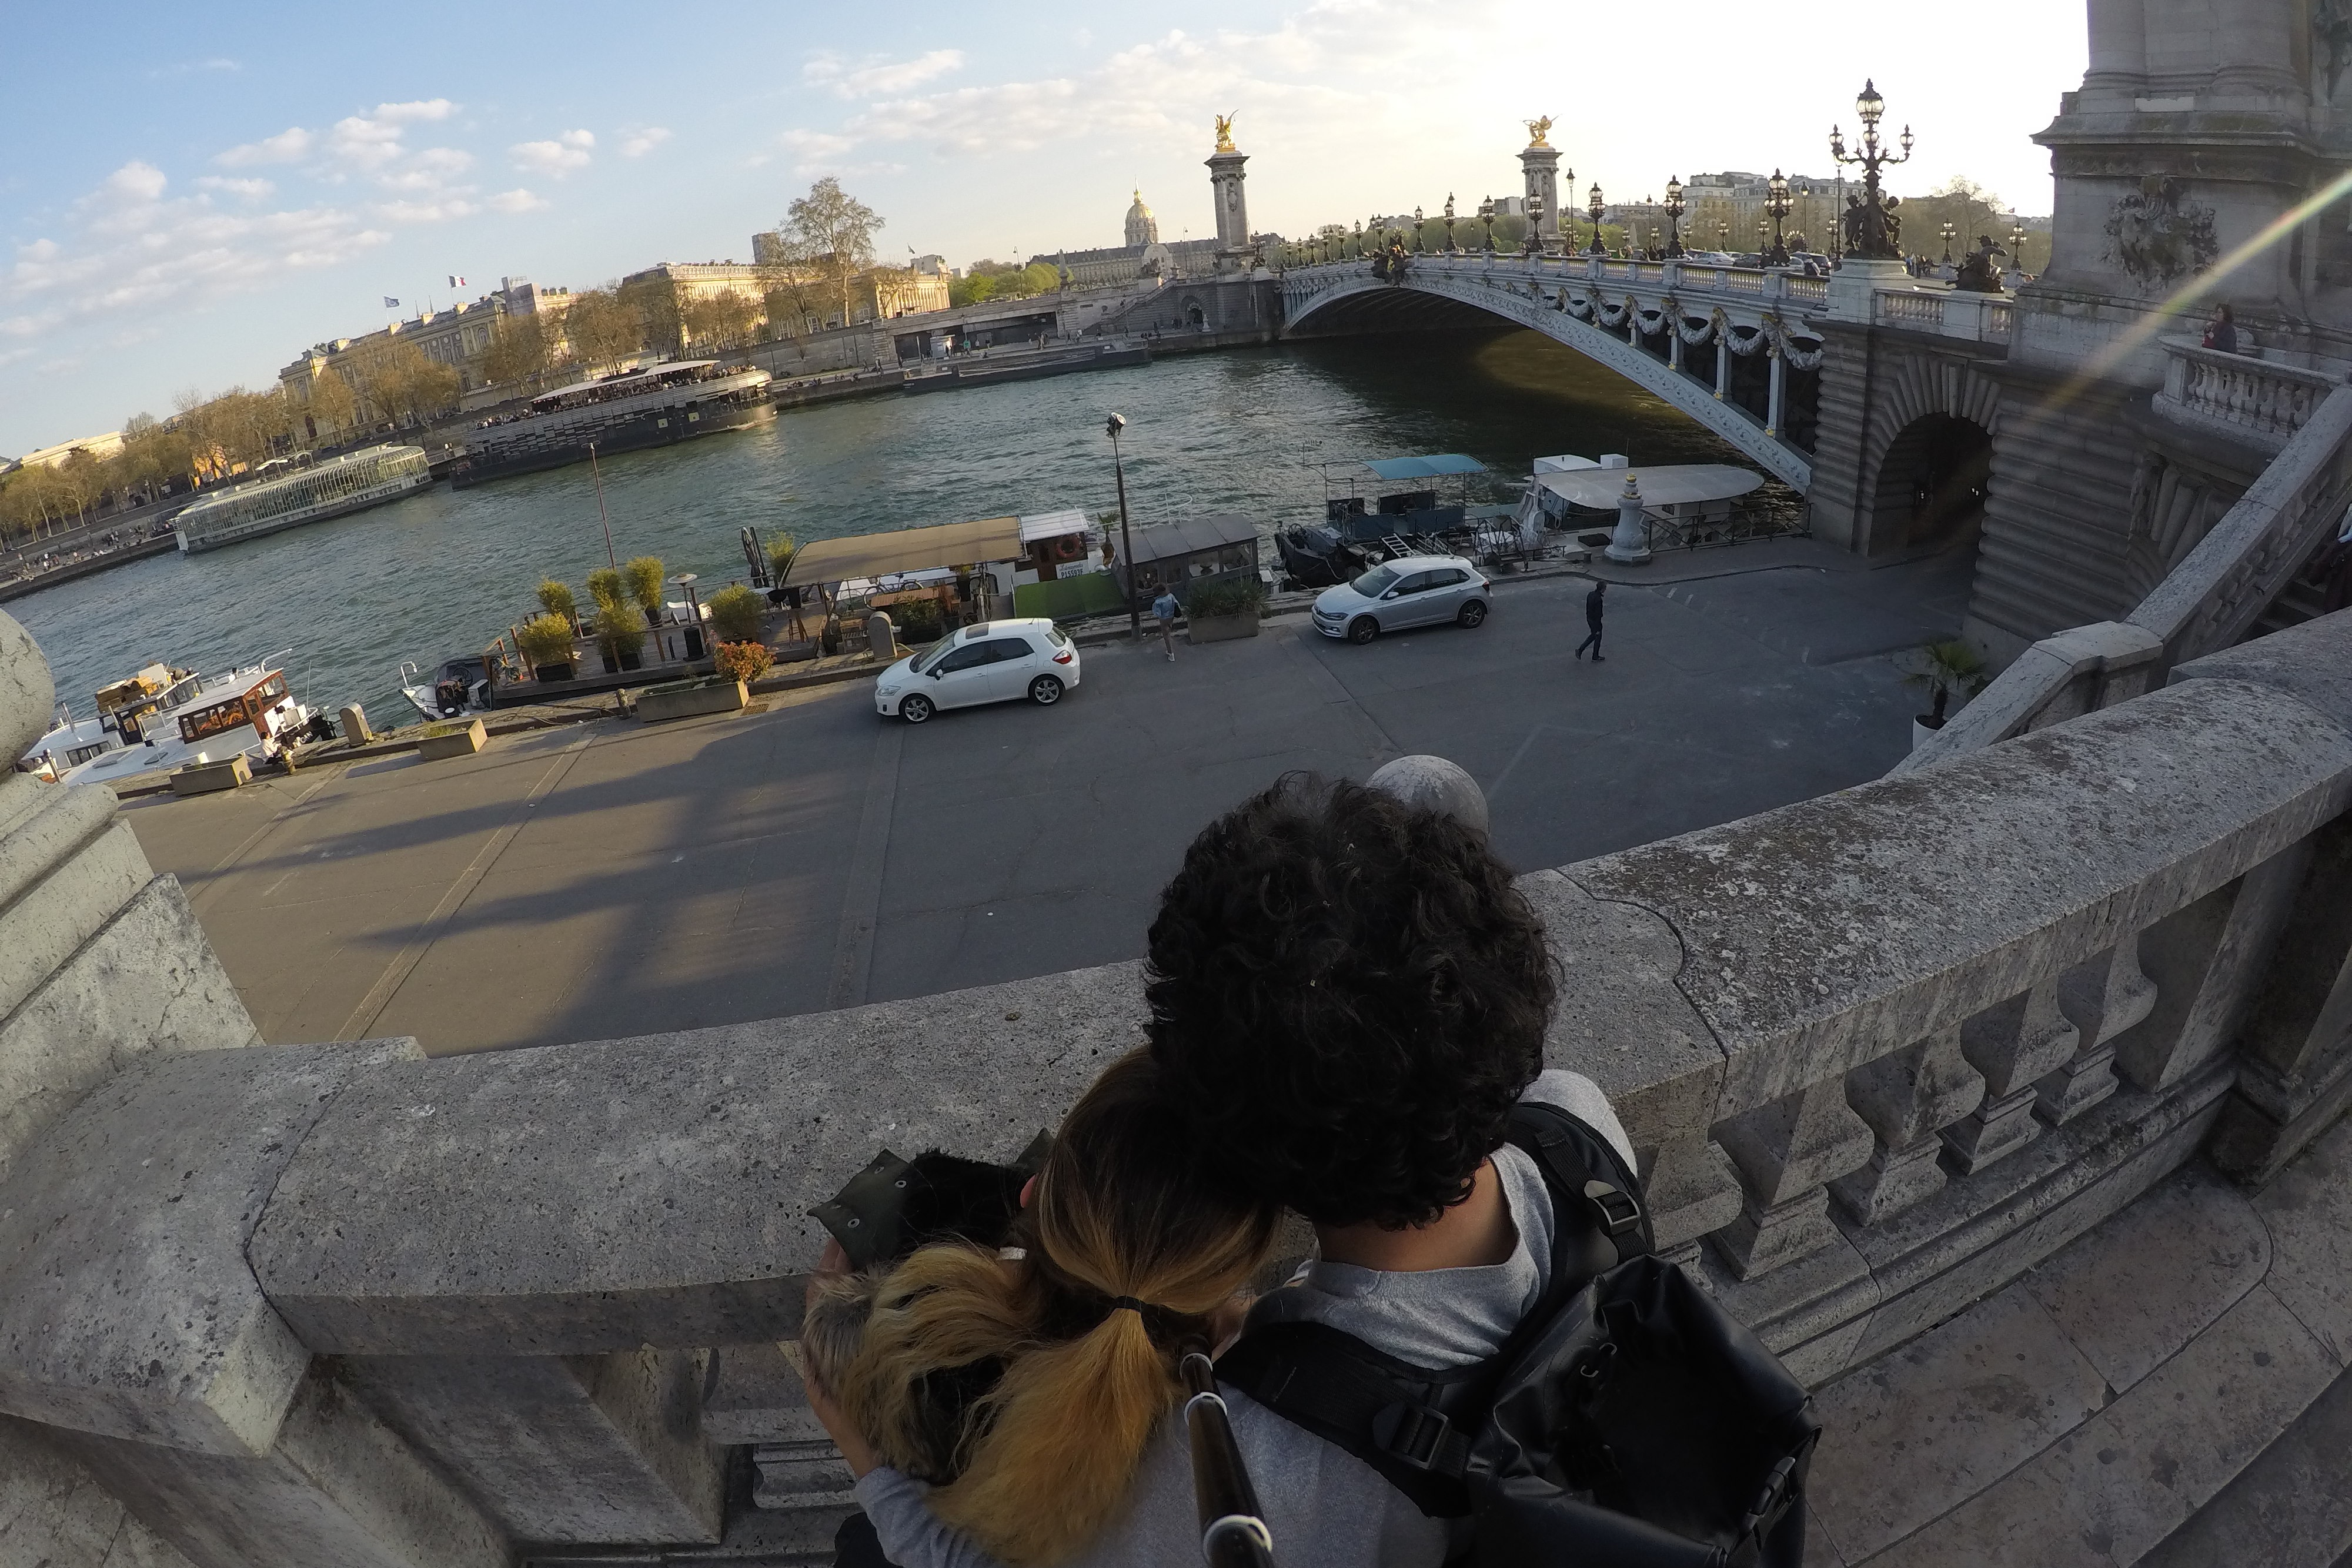 views from a bridge in Seine River in Paris